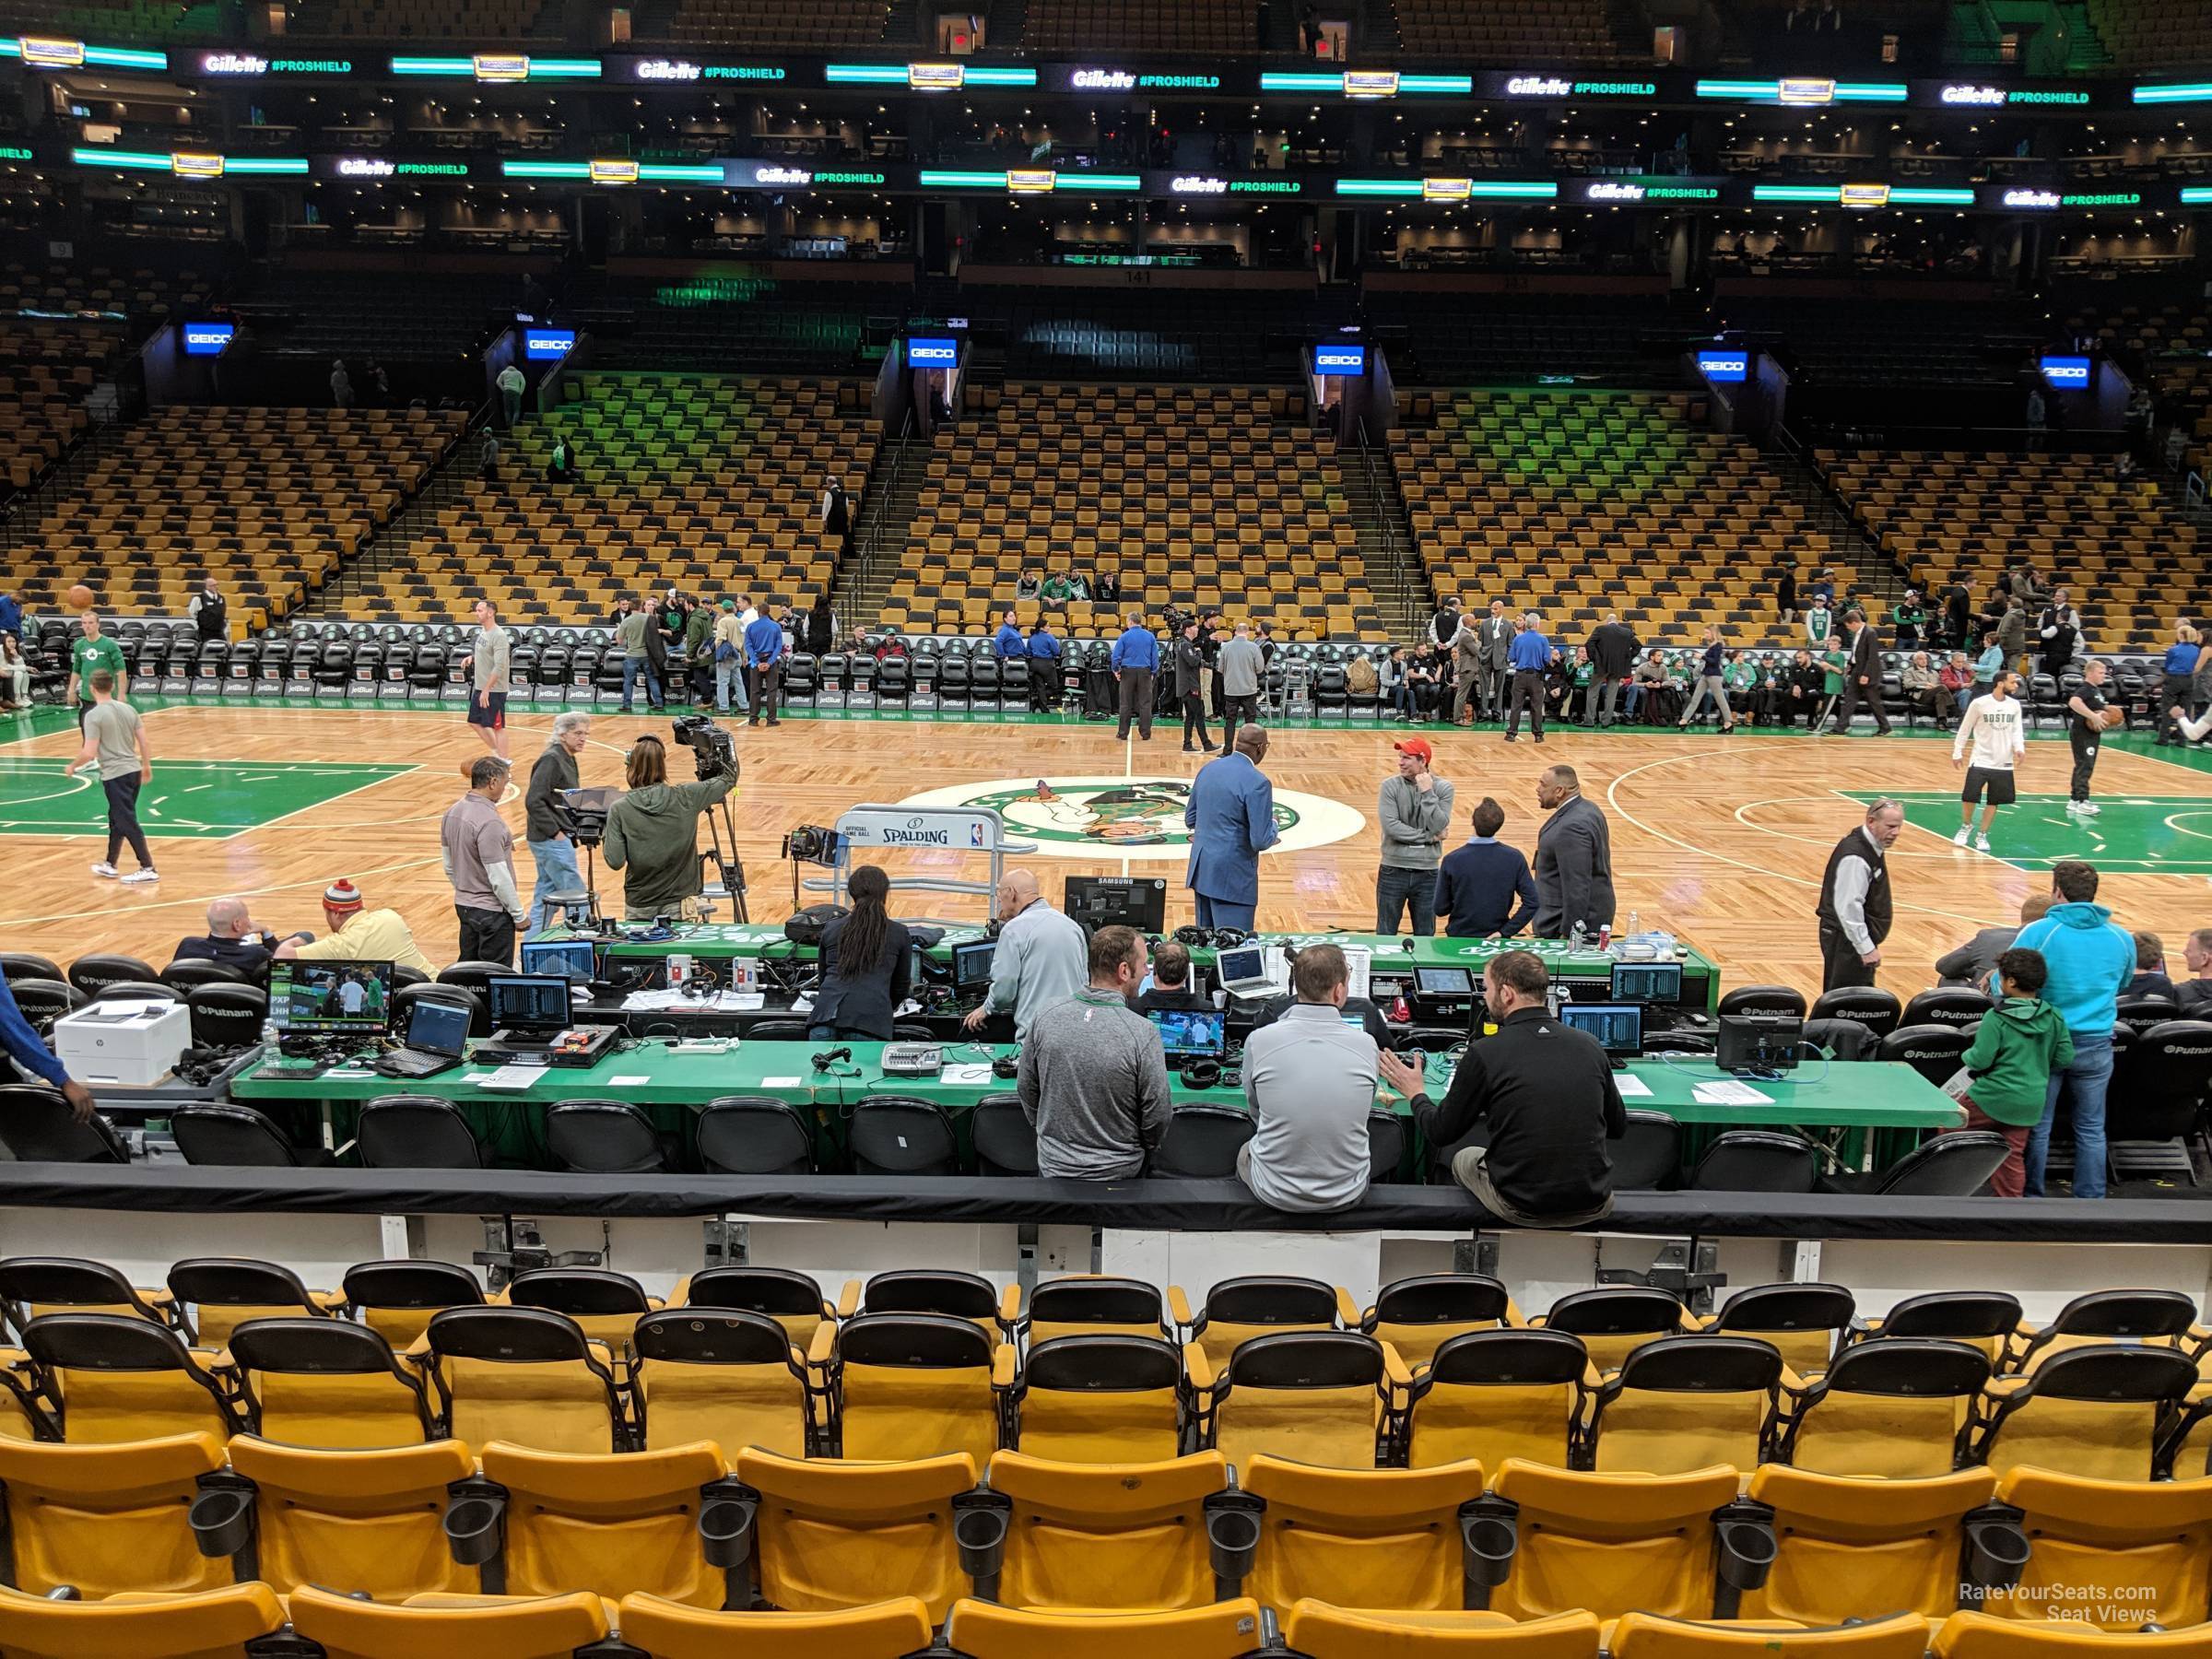 Loge 1 at TD Garden Boston Celtics RateYourSeats com